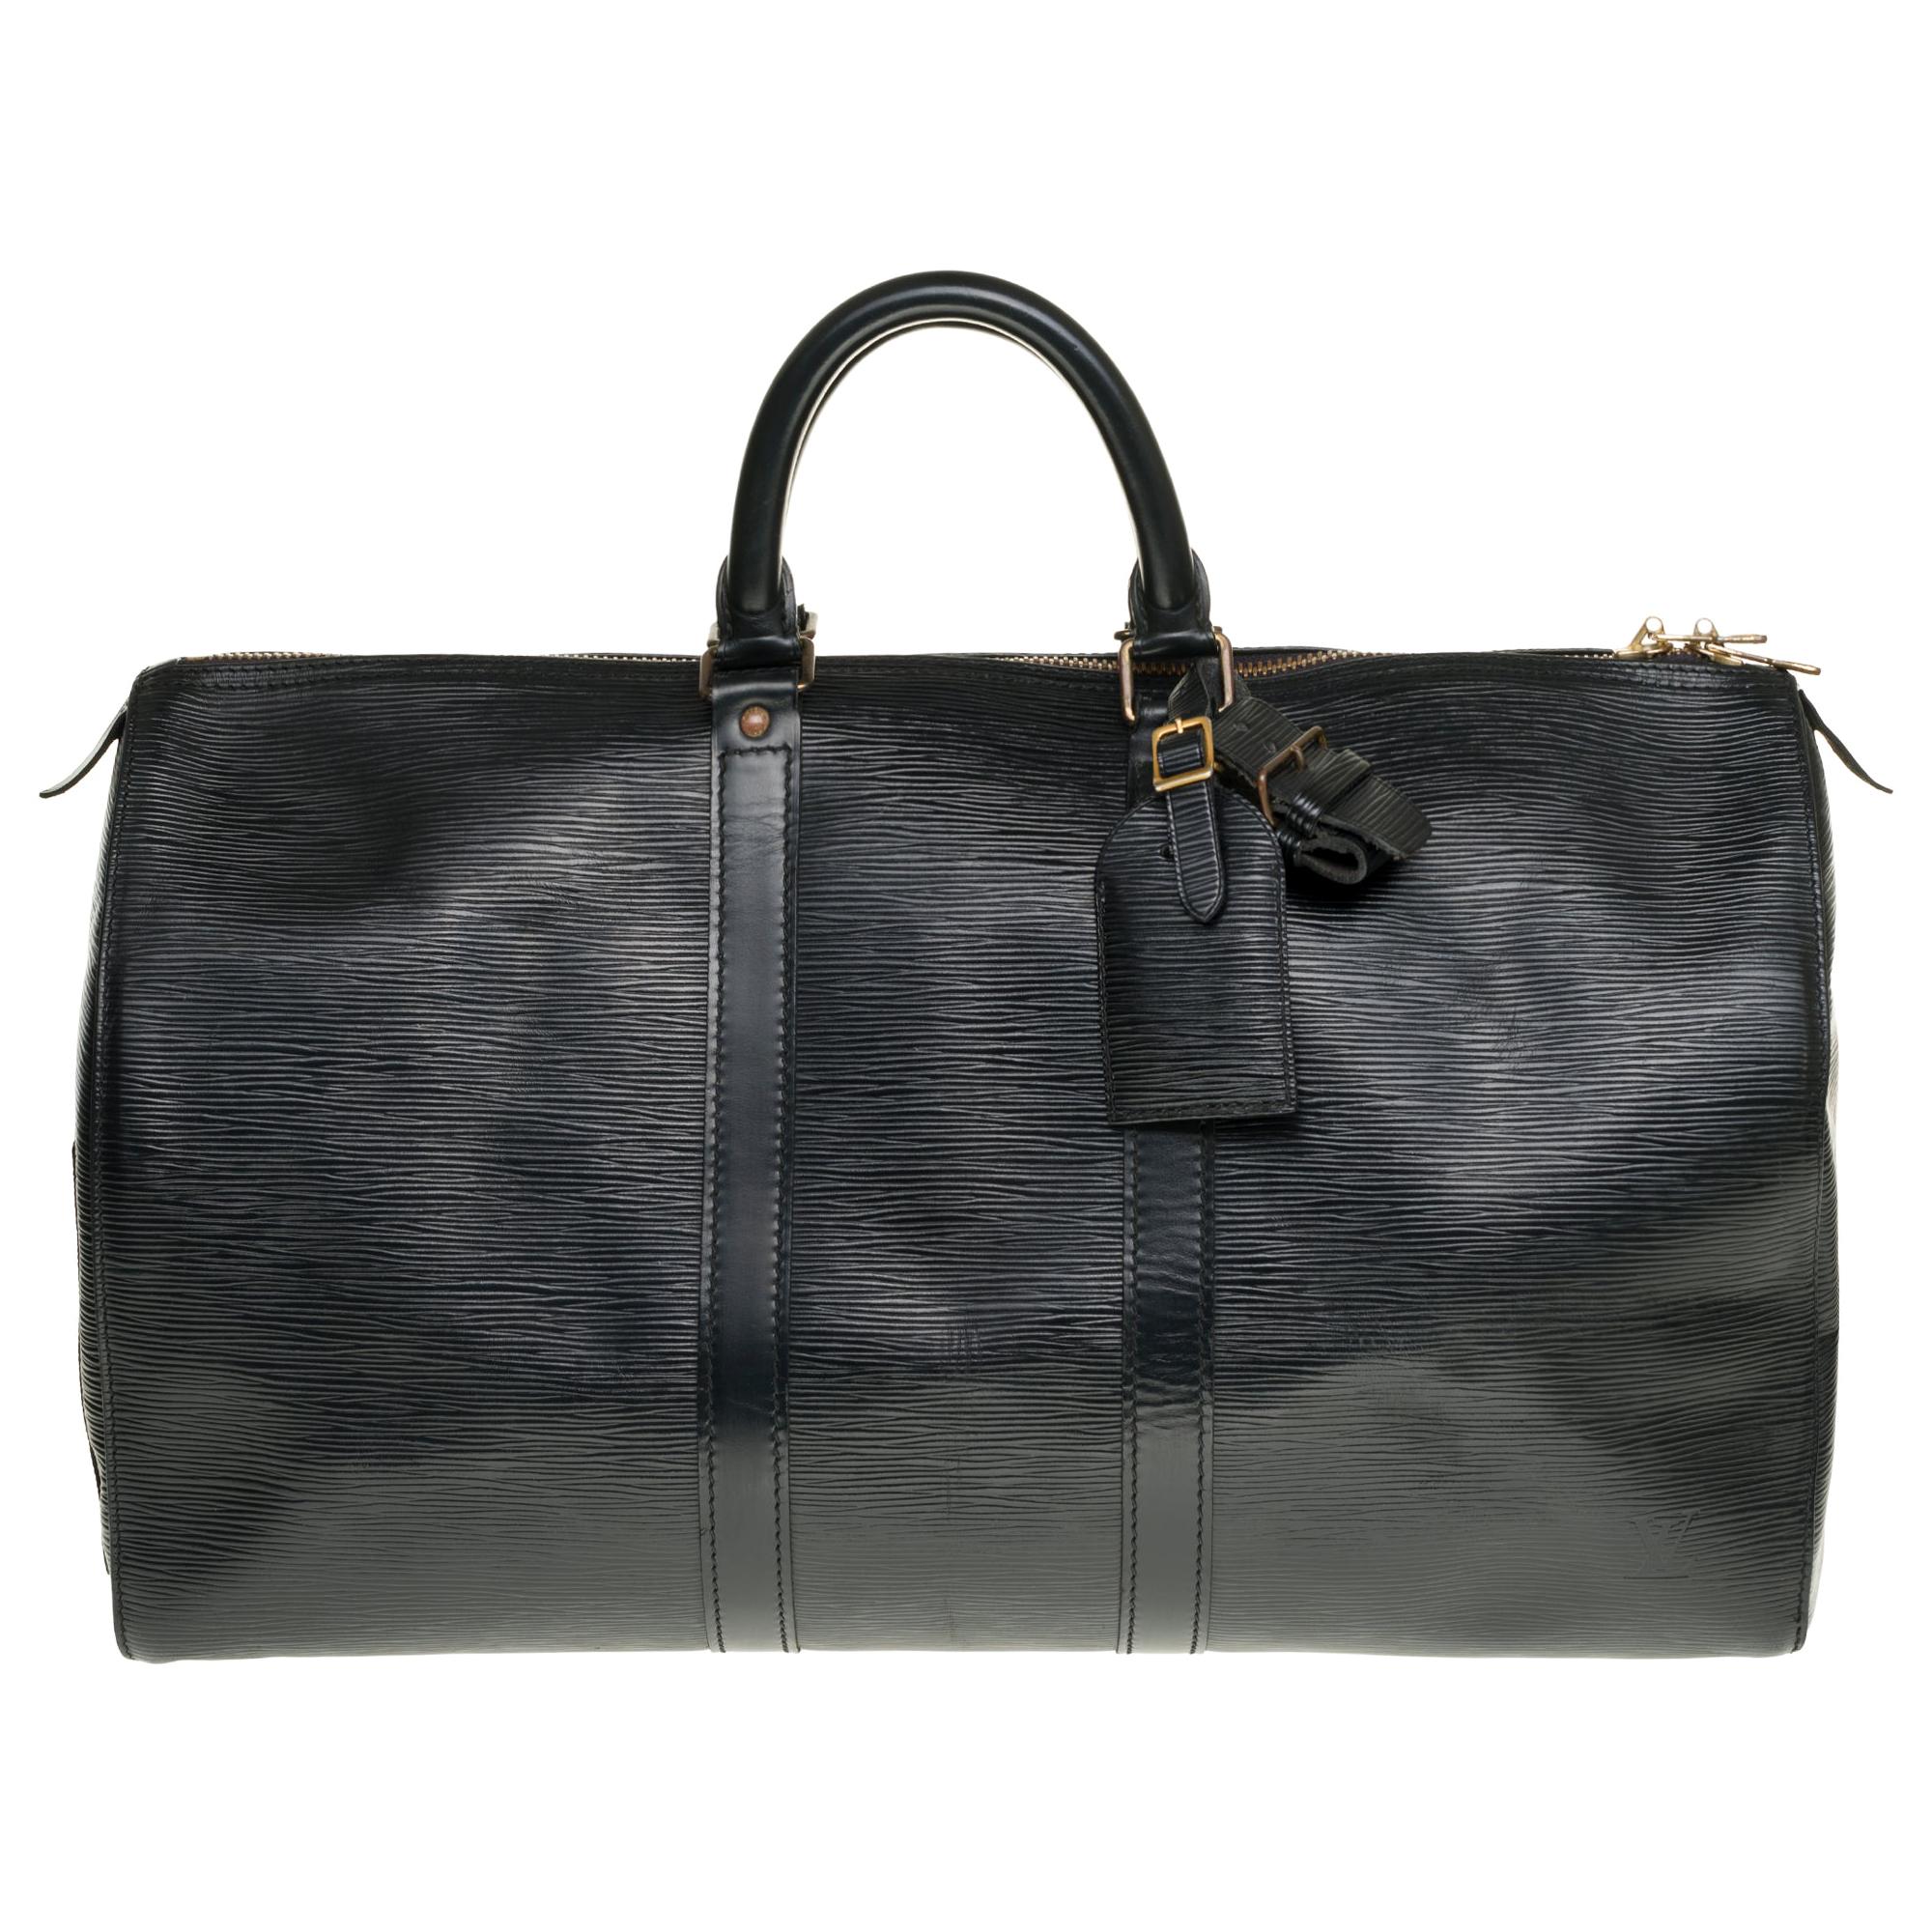 Louis Vuitton Keepall 45 Travel bag in black épi leather